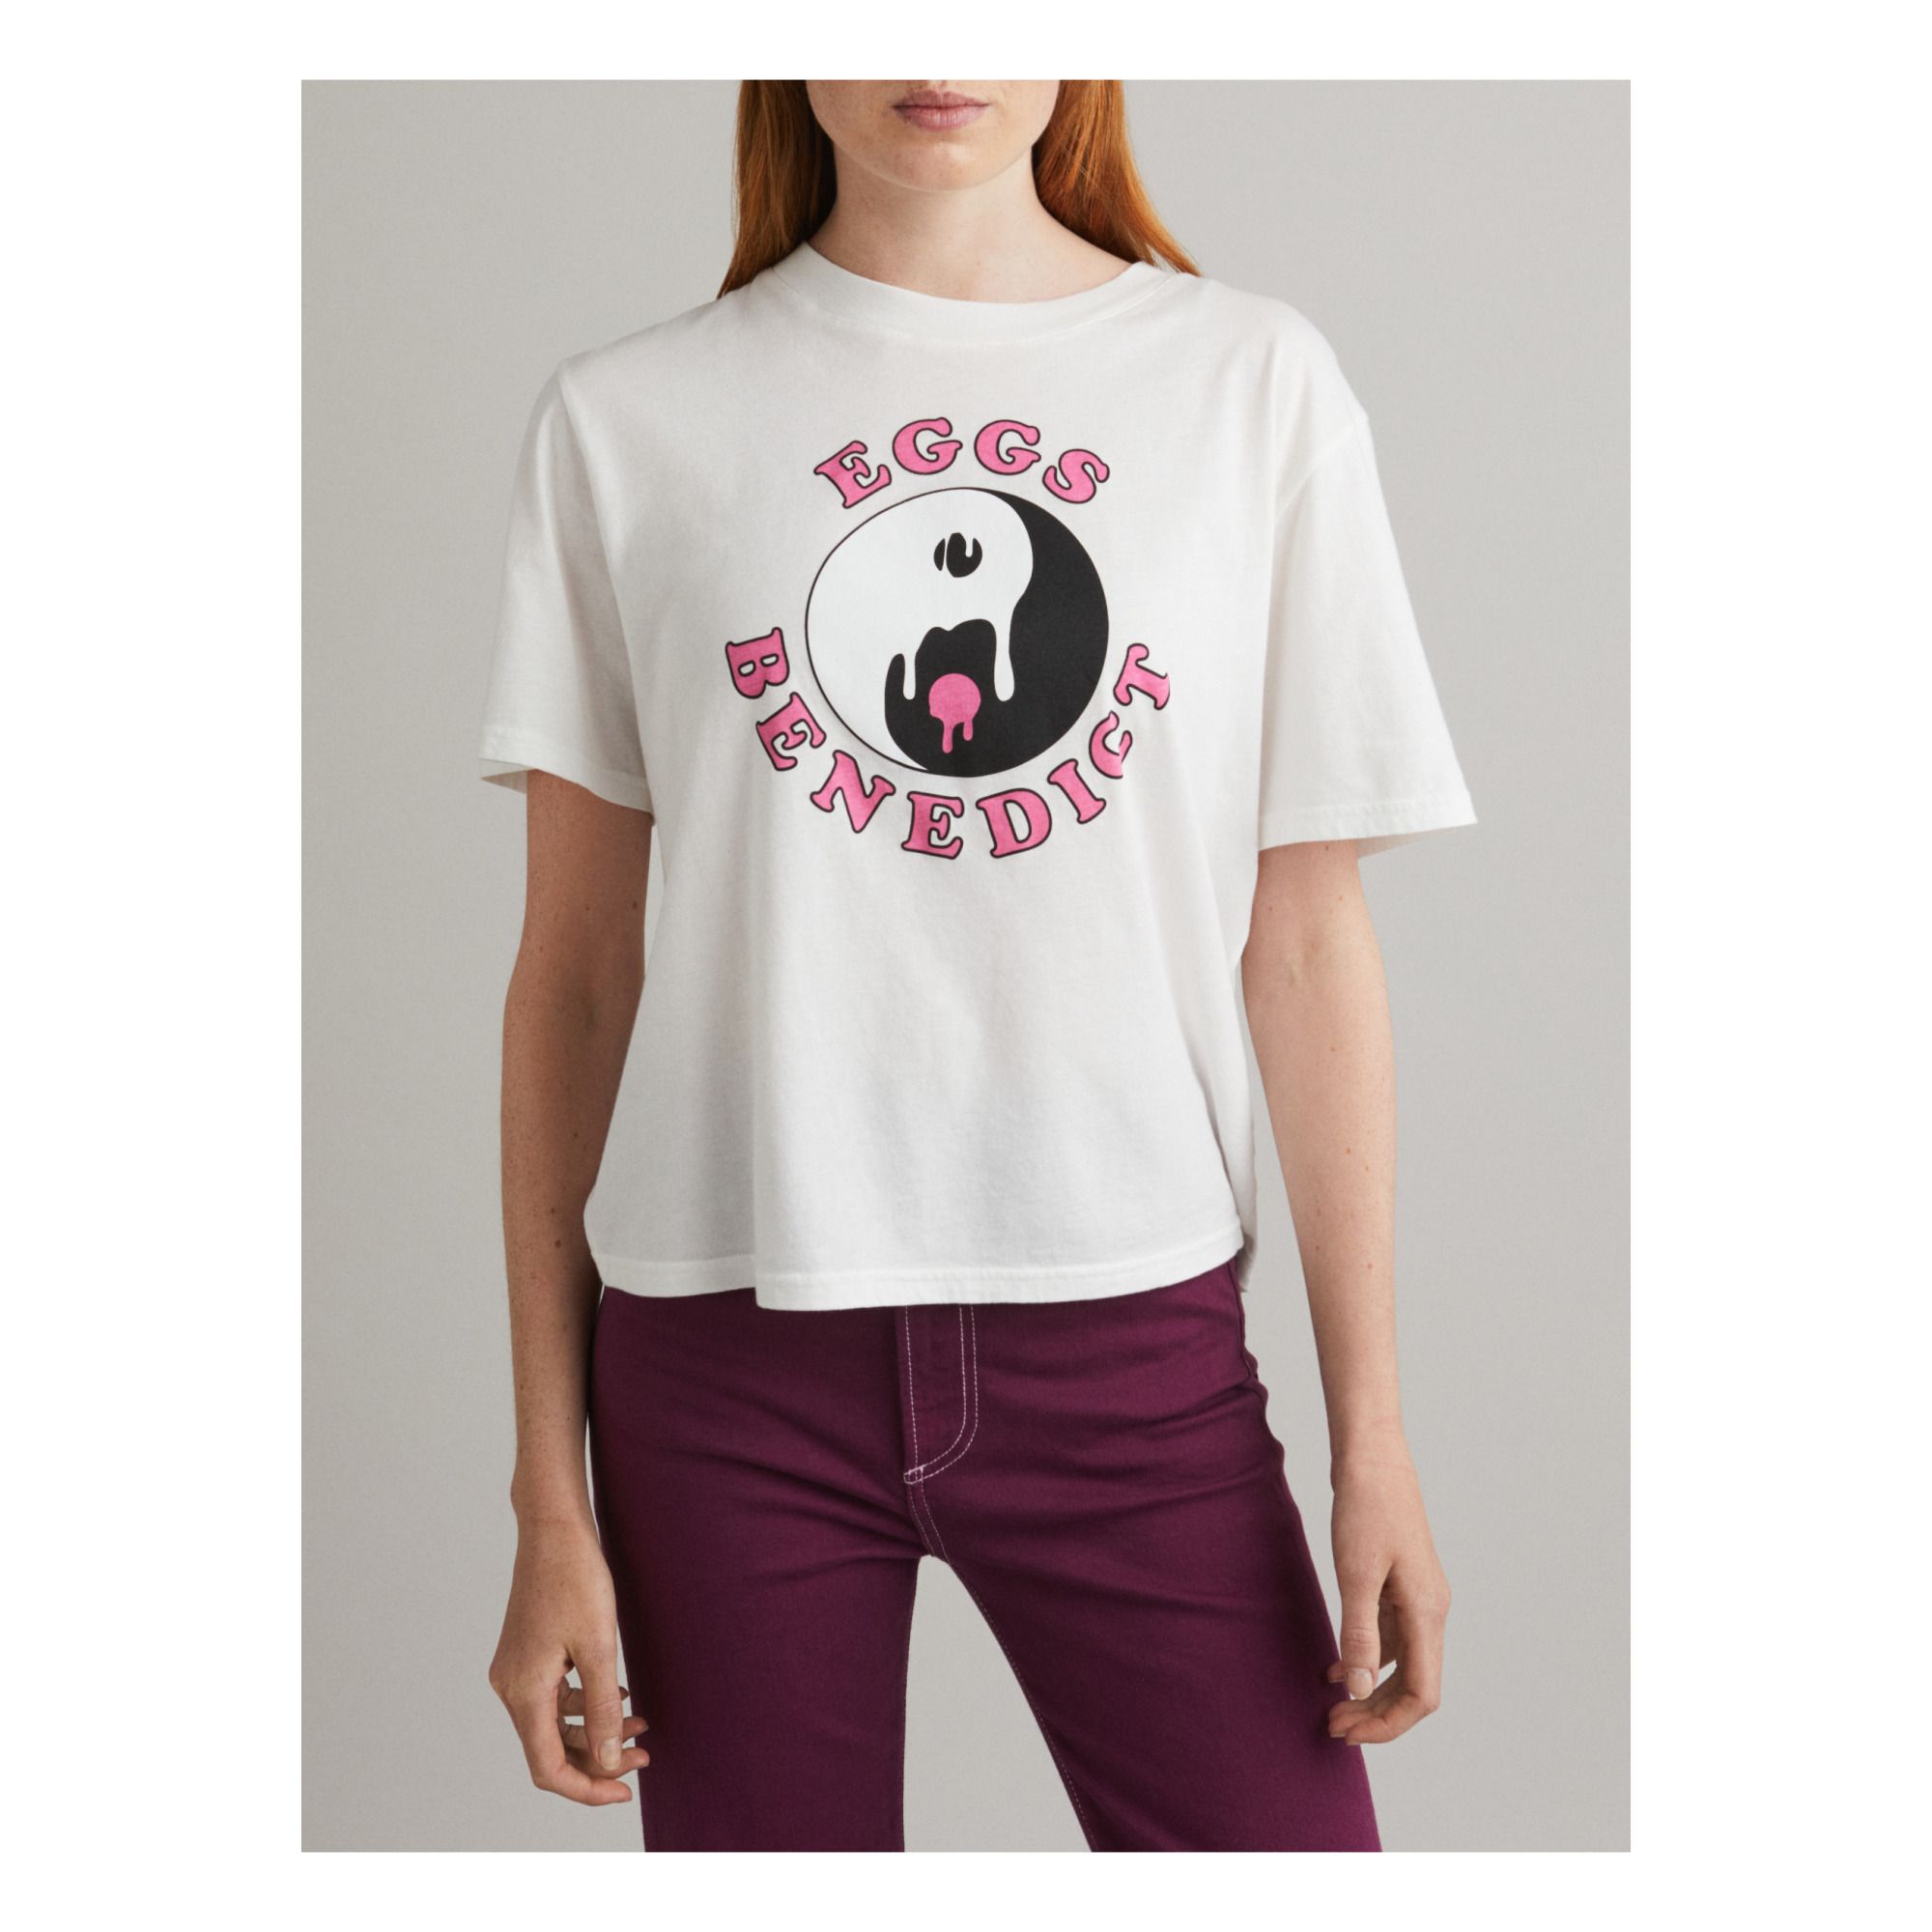 Jeanerica - T-Shirt Zoe 120 Coton Bio - Femme - Blanc cassé